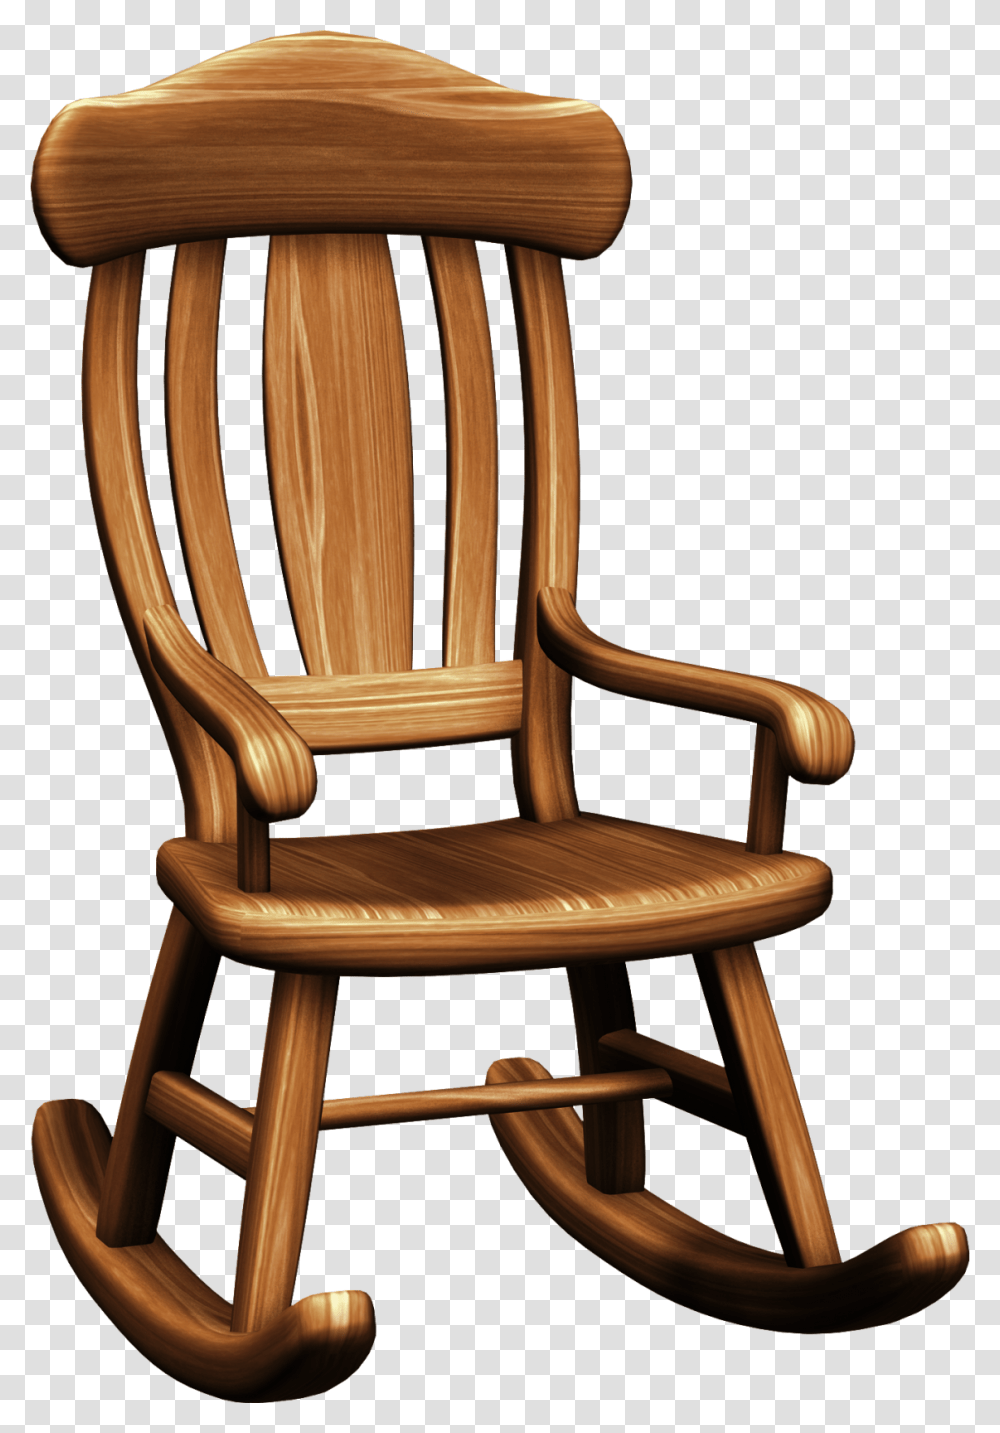 E Objetos Da Casa E Objetos Da Casa, Furniture, Chair, Armchair, Rocking Chair Transparent Png